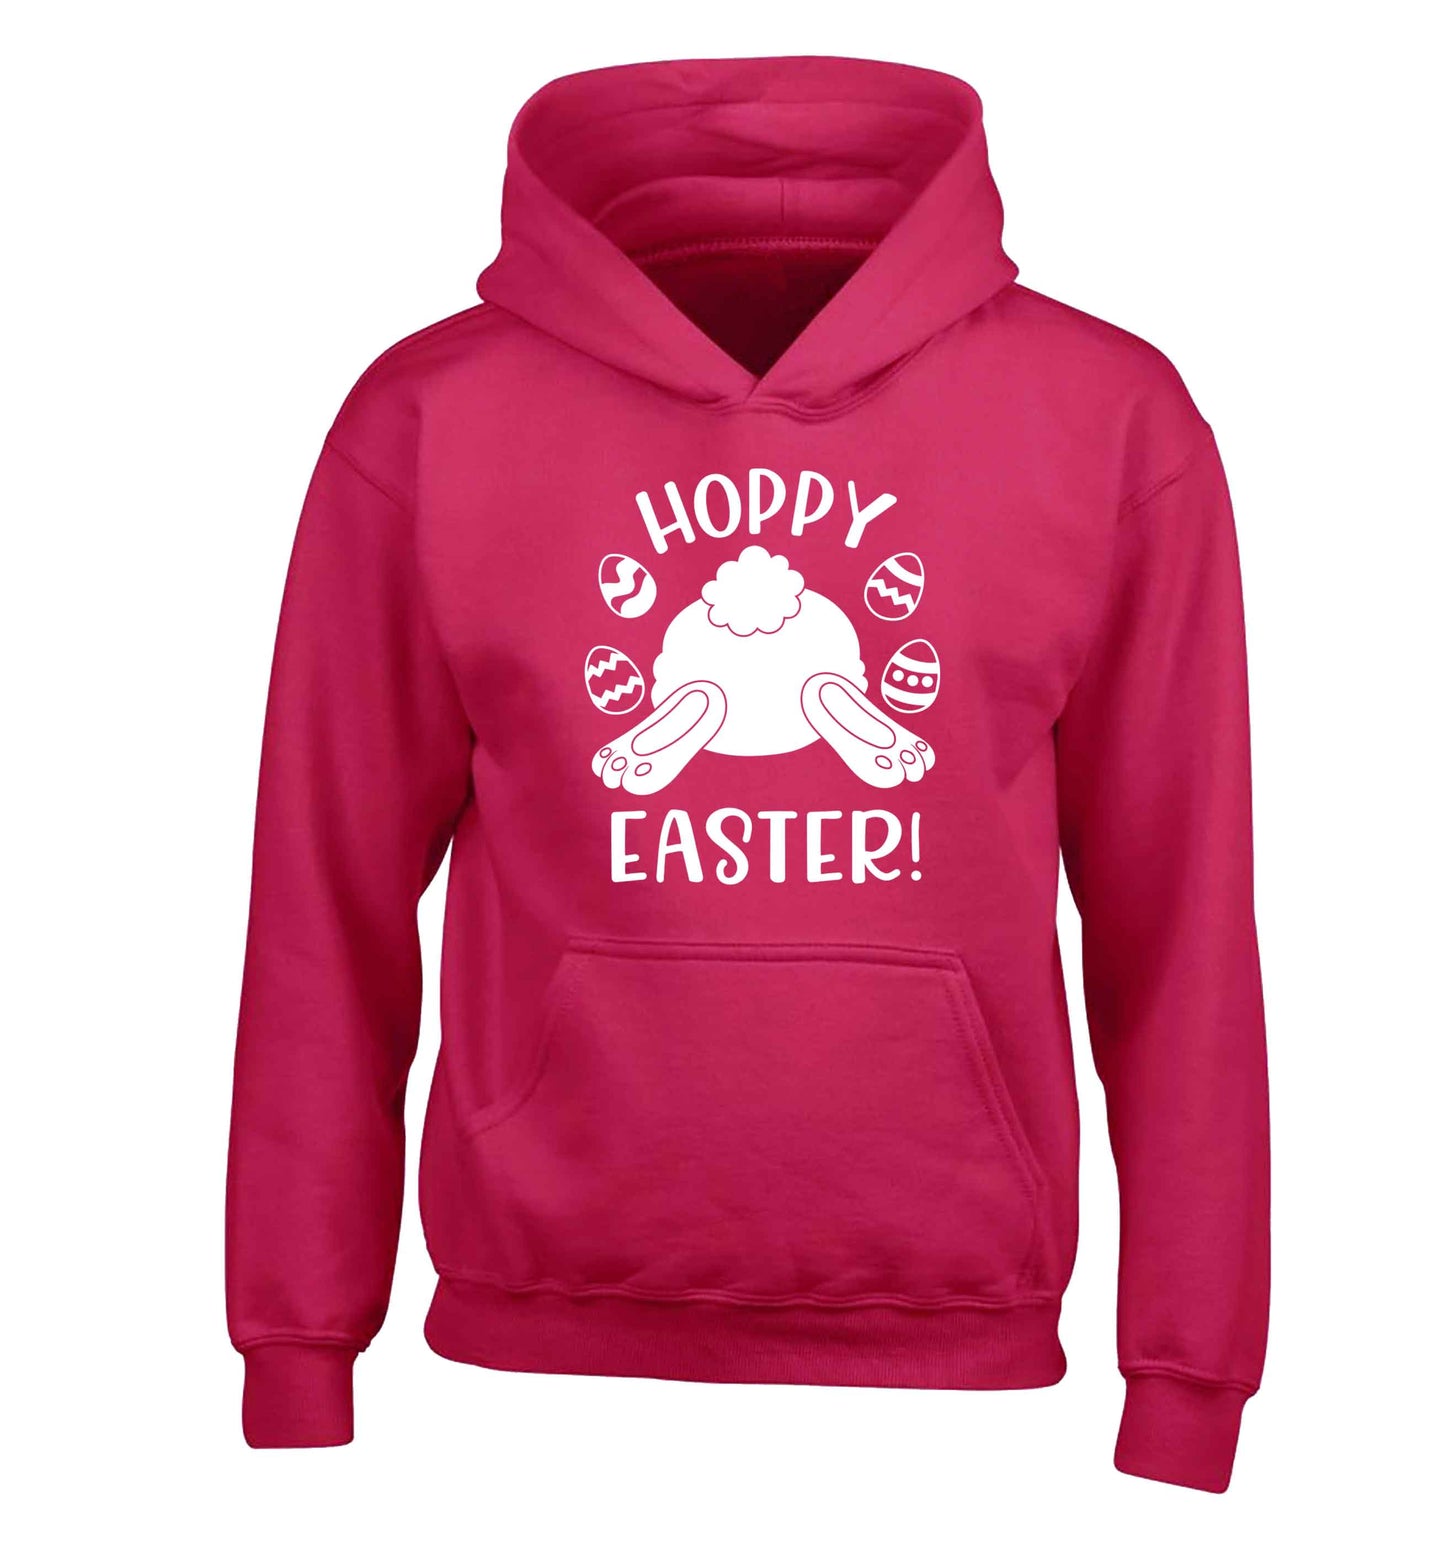 Hoppy Easter children's pink hoodie 12-13 Years